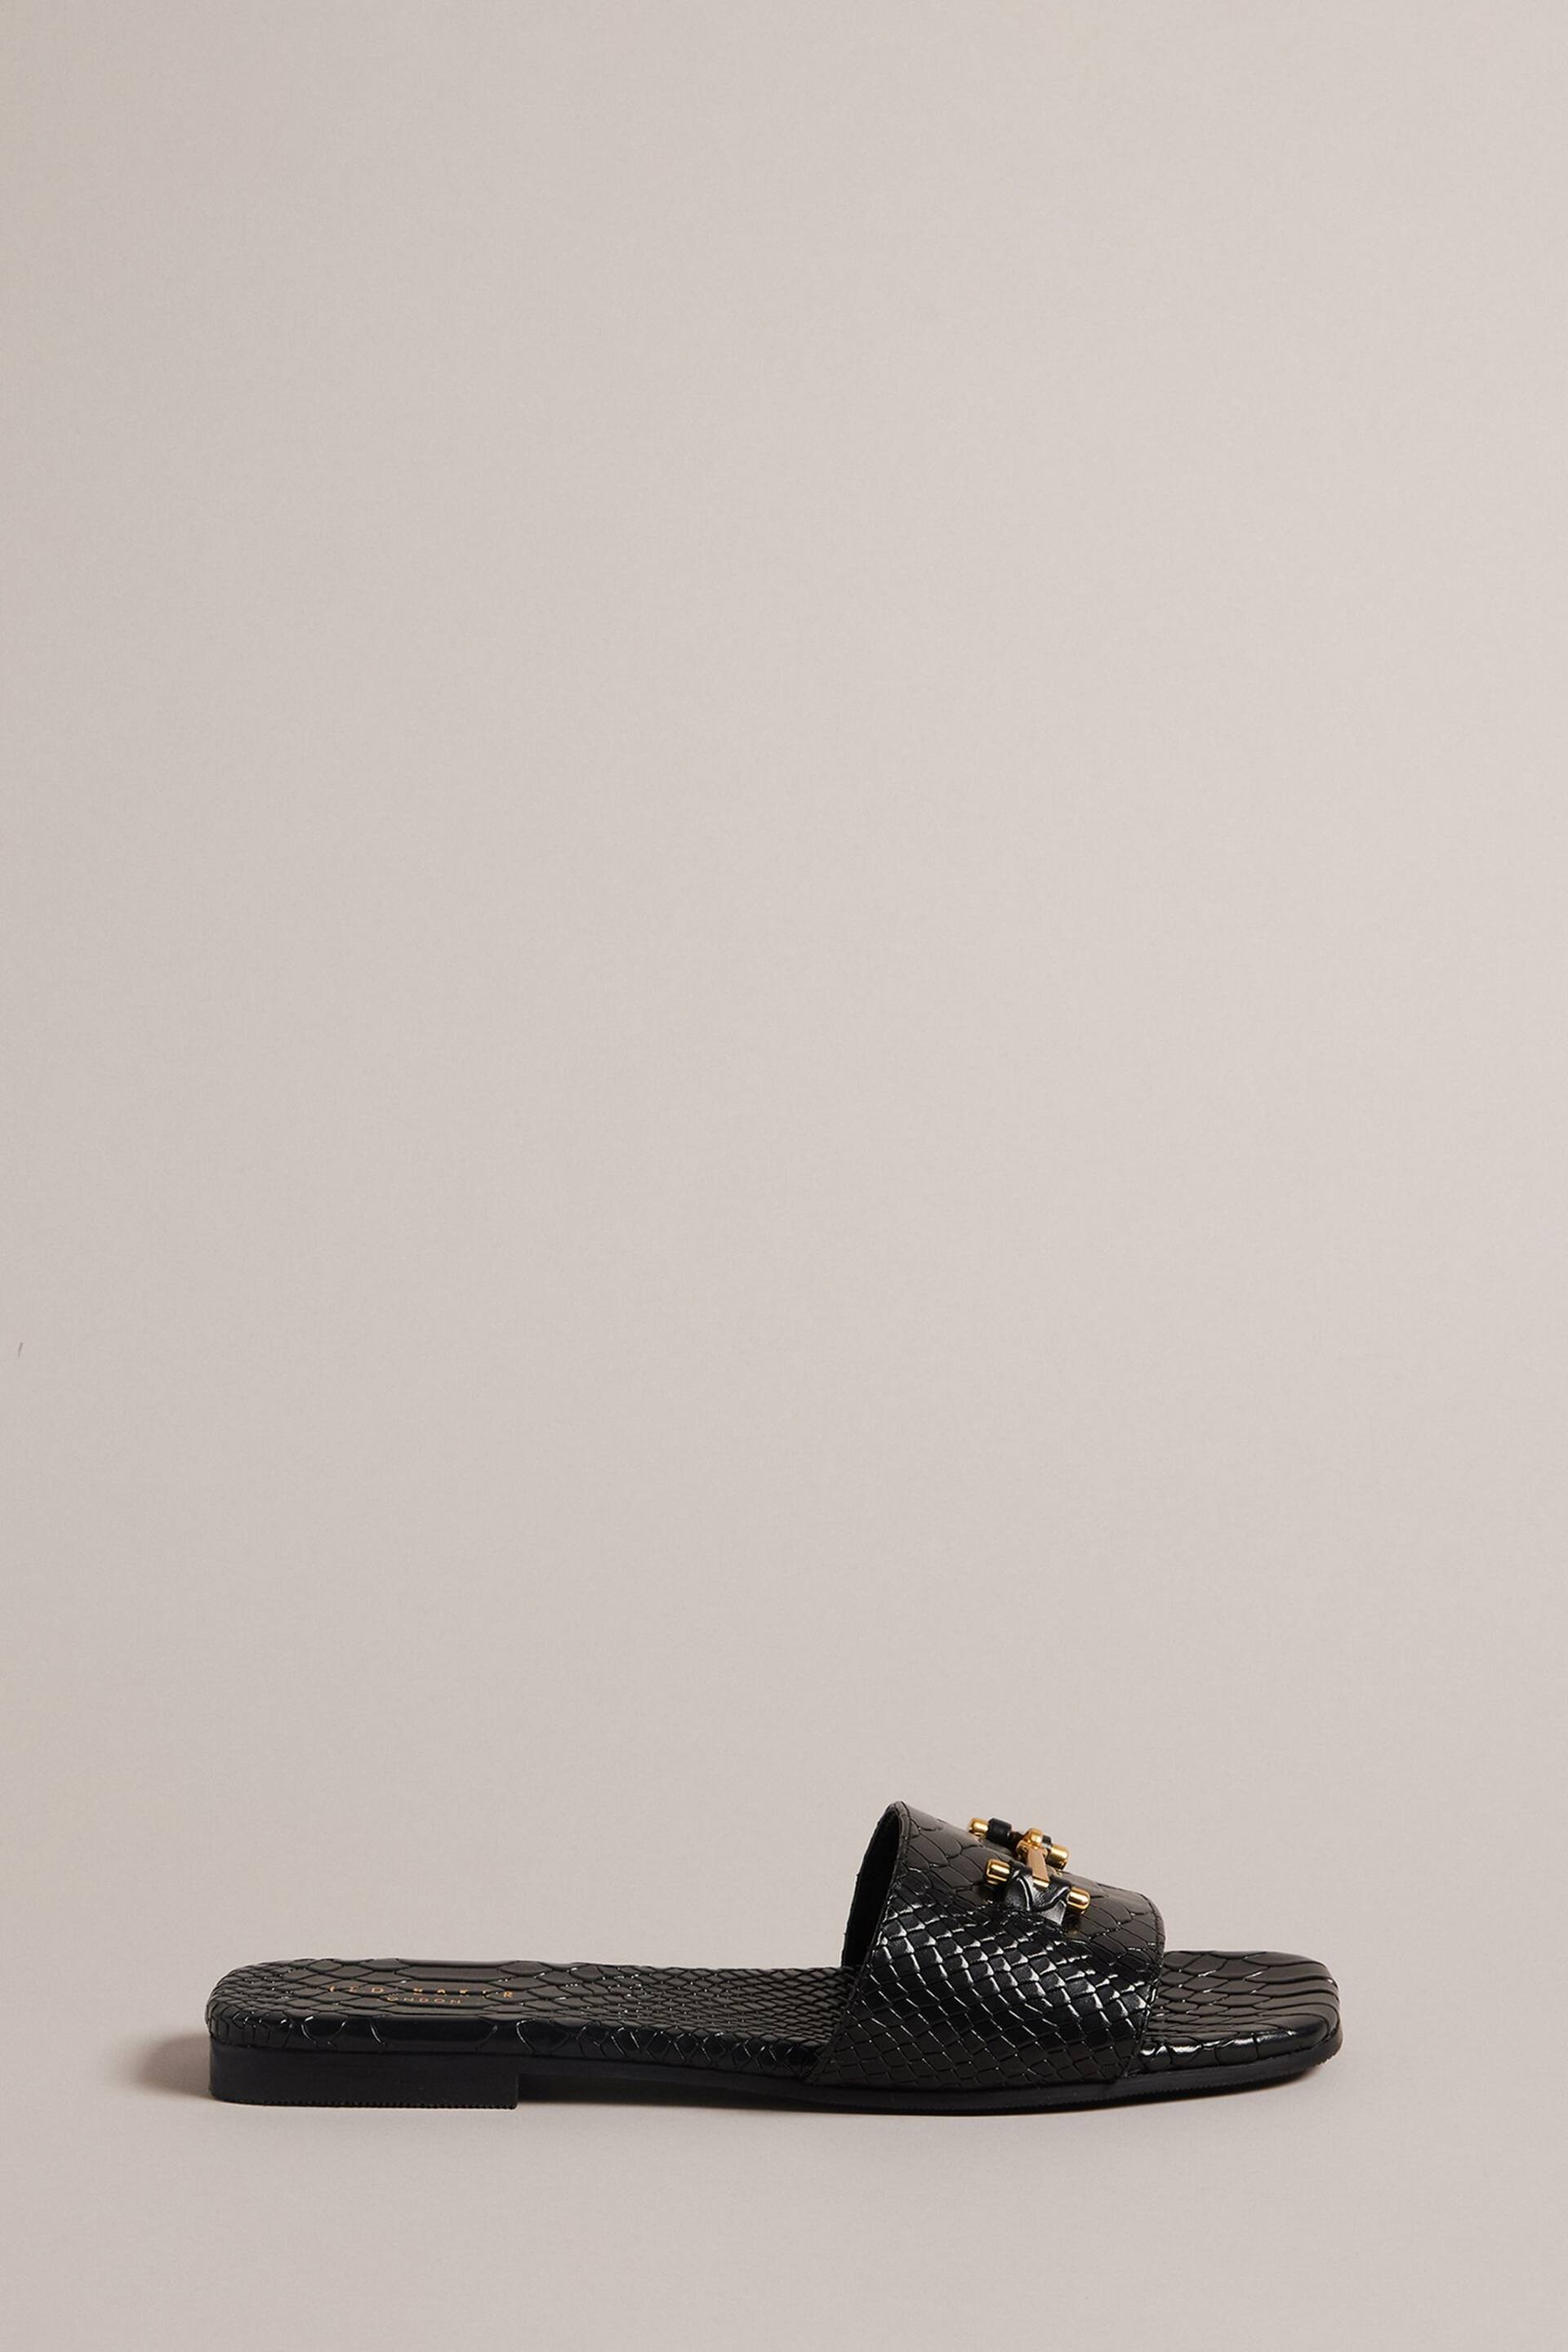 Ted Baker Black Ashinu Snaffle Sandals - Image 1 of 5